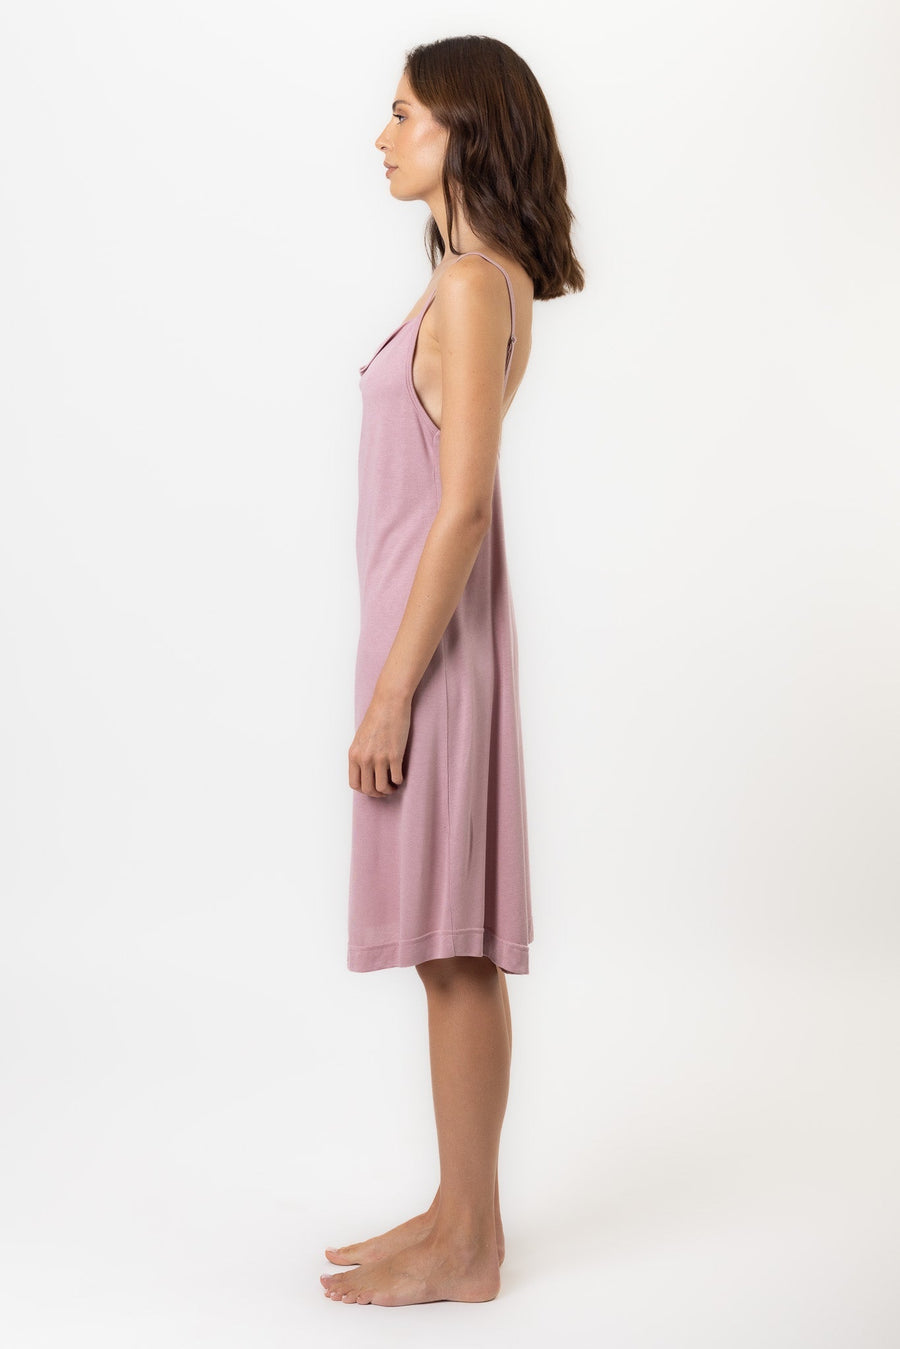 Sienna Night Dress| Blush Pink Sienna Nightdress Night Dresses Pajamas Australia Online | Reverie the Label  DRESS Sienna Nightdress